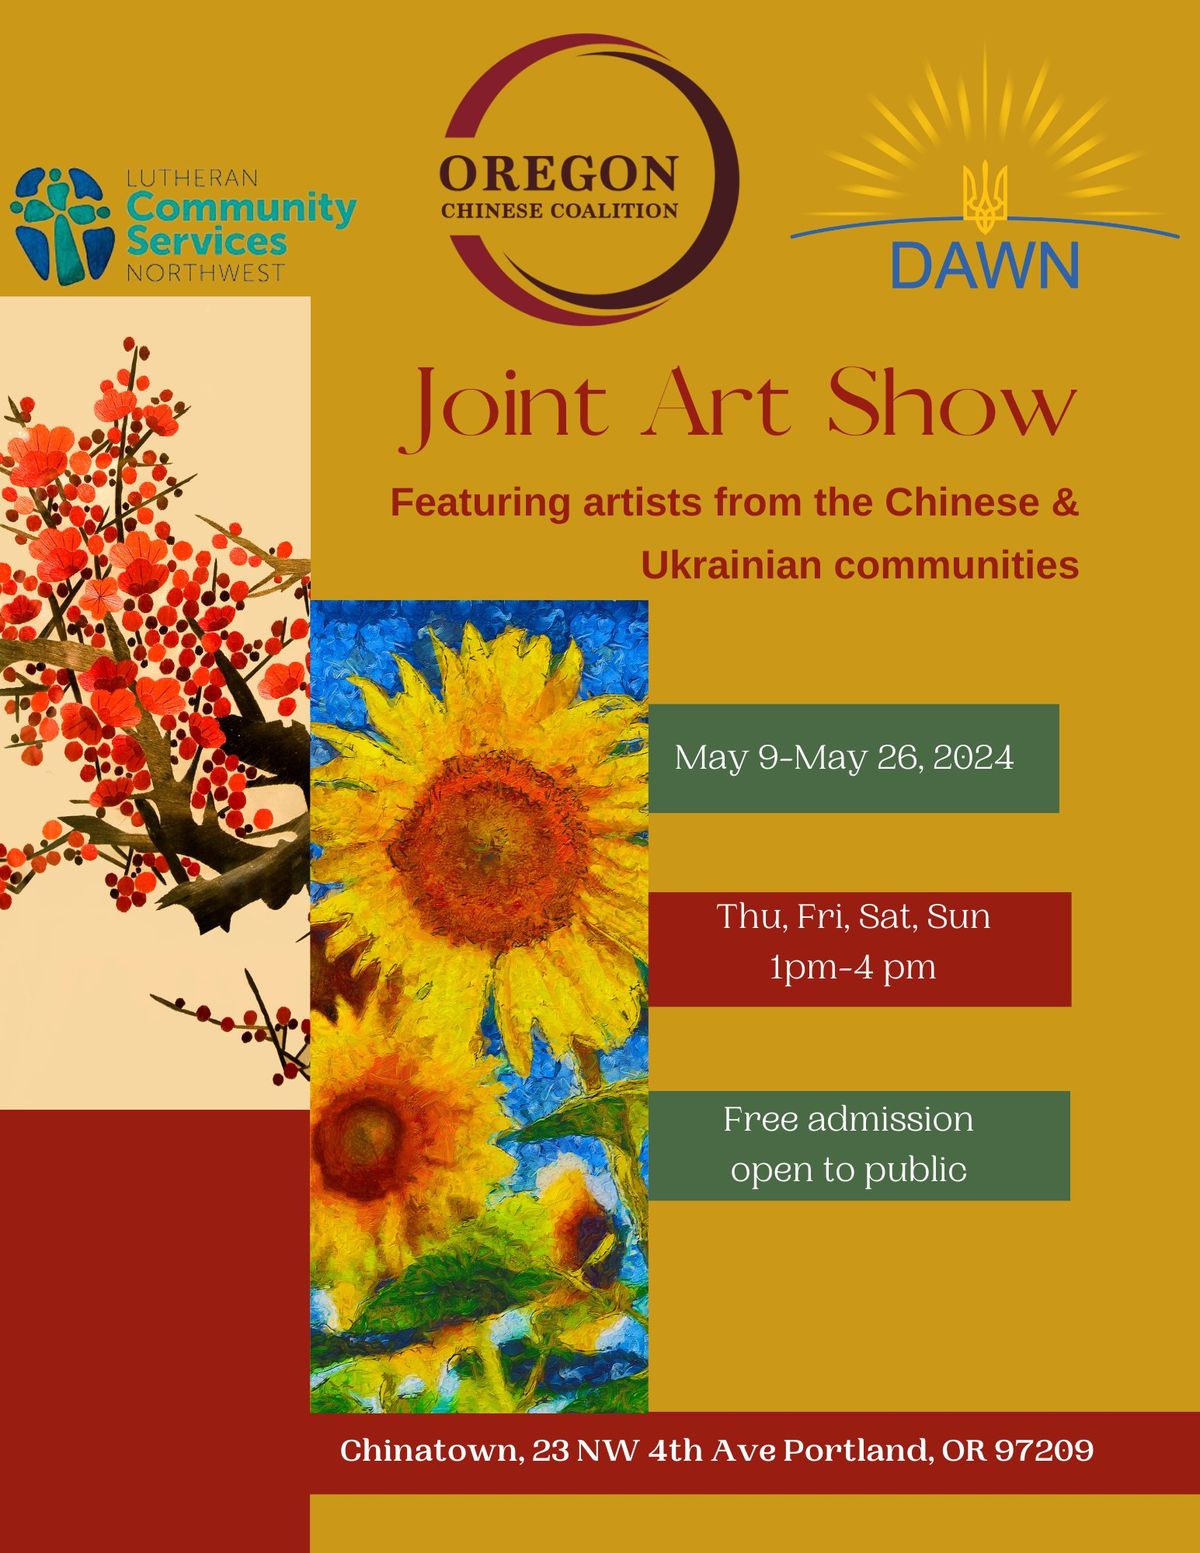 Joint Community Art Show featuring Chinese & Ukrainian artists